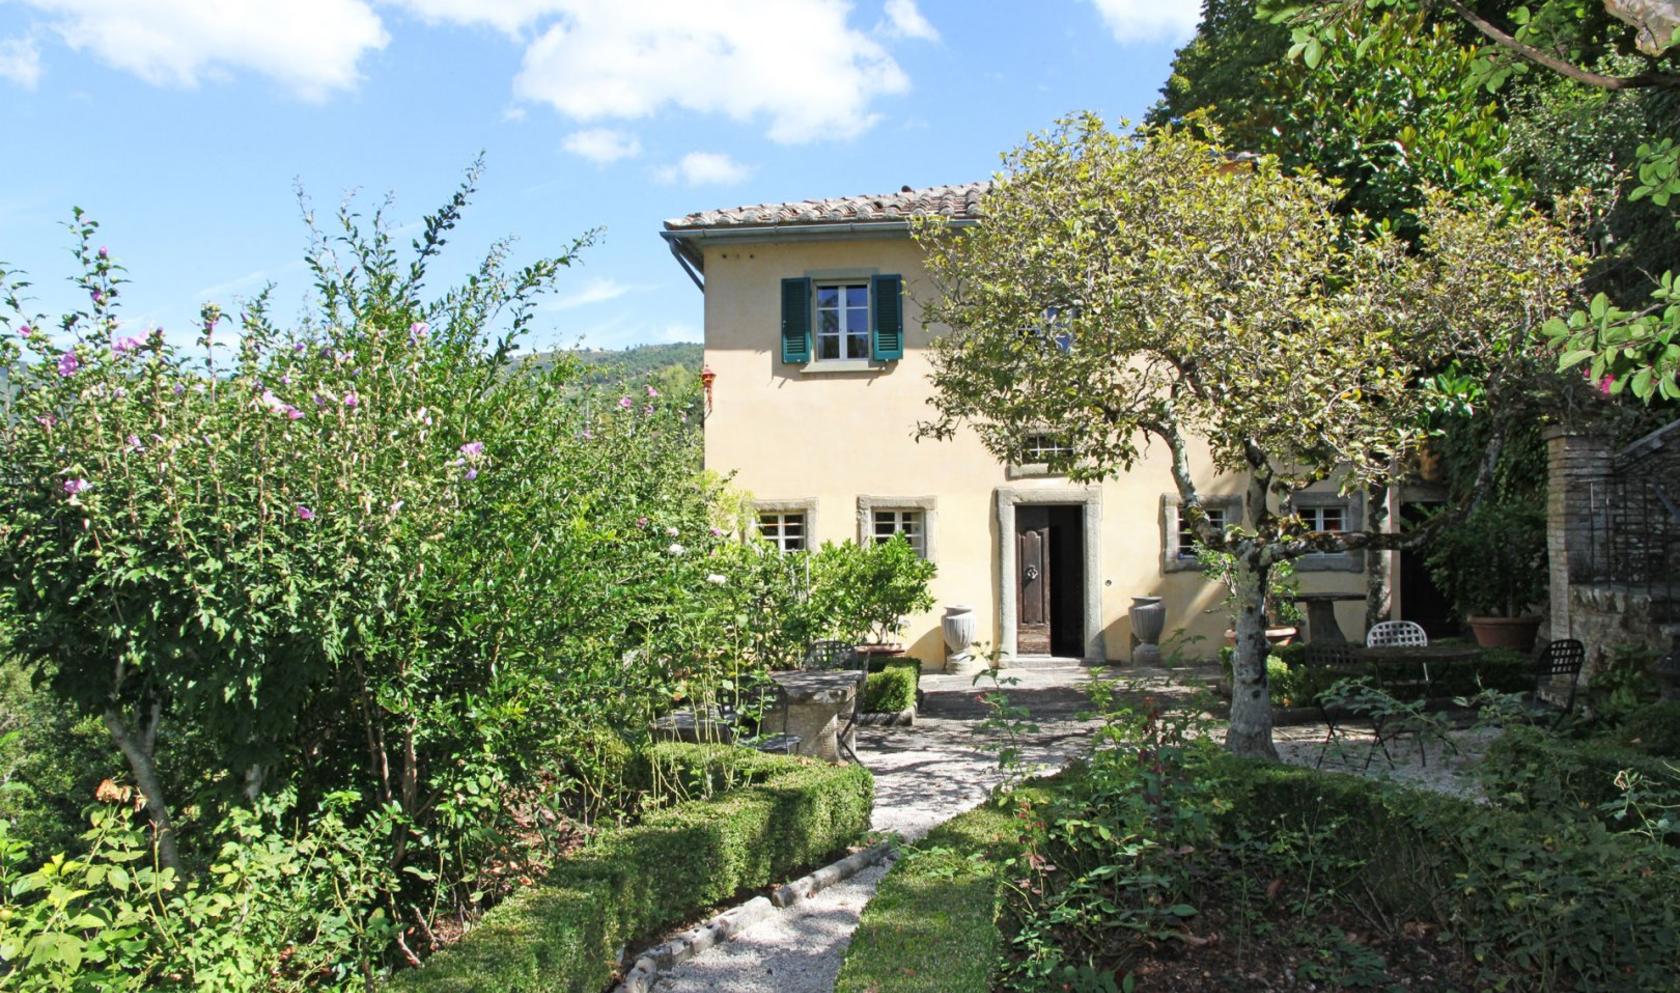 Toscana Immobiliare - Ancient luxury Tuscan villa frescoed for sale in Cortona, Tuscany